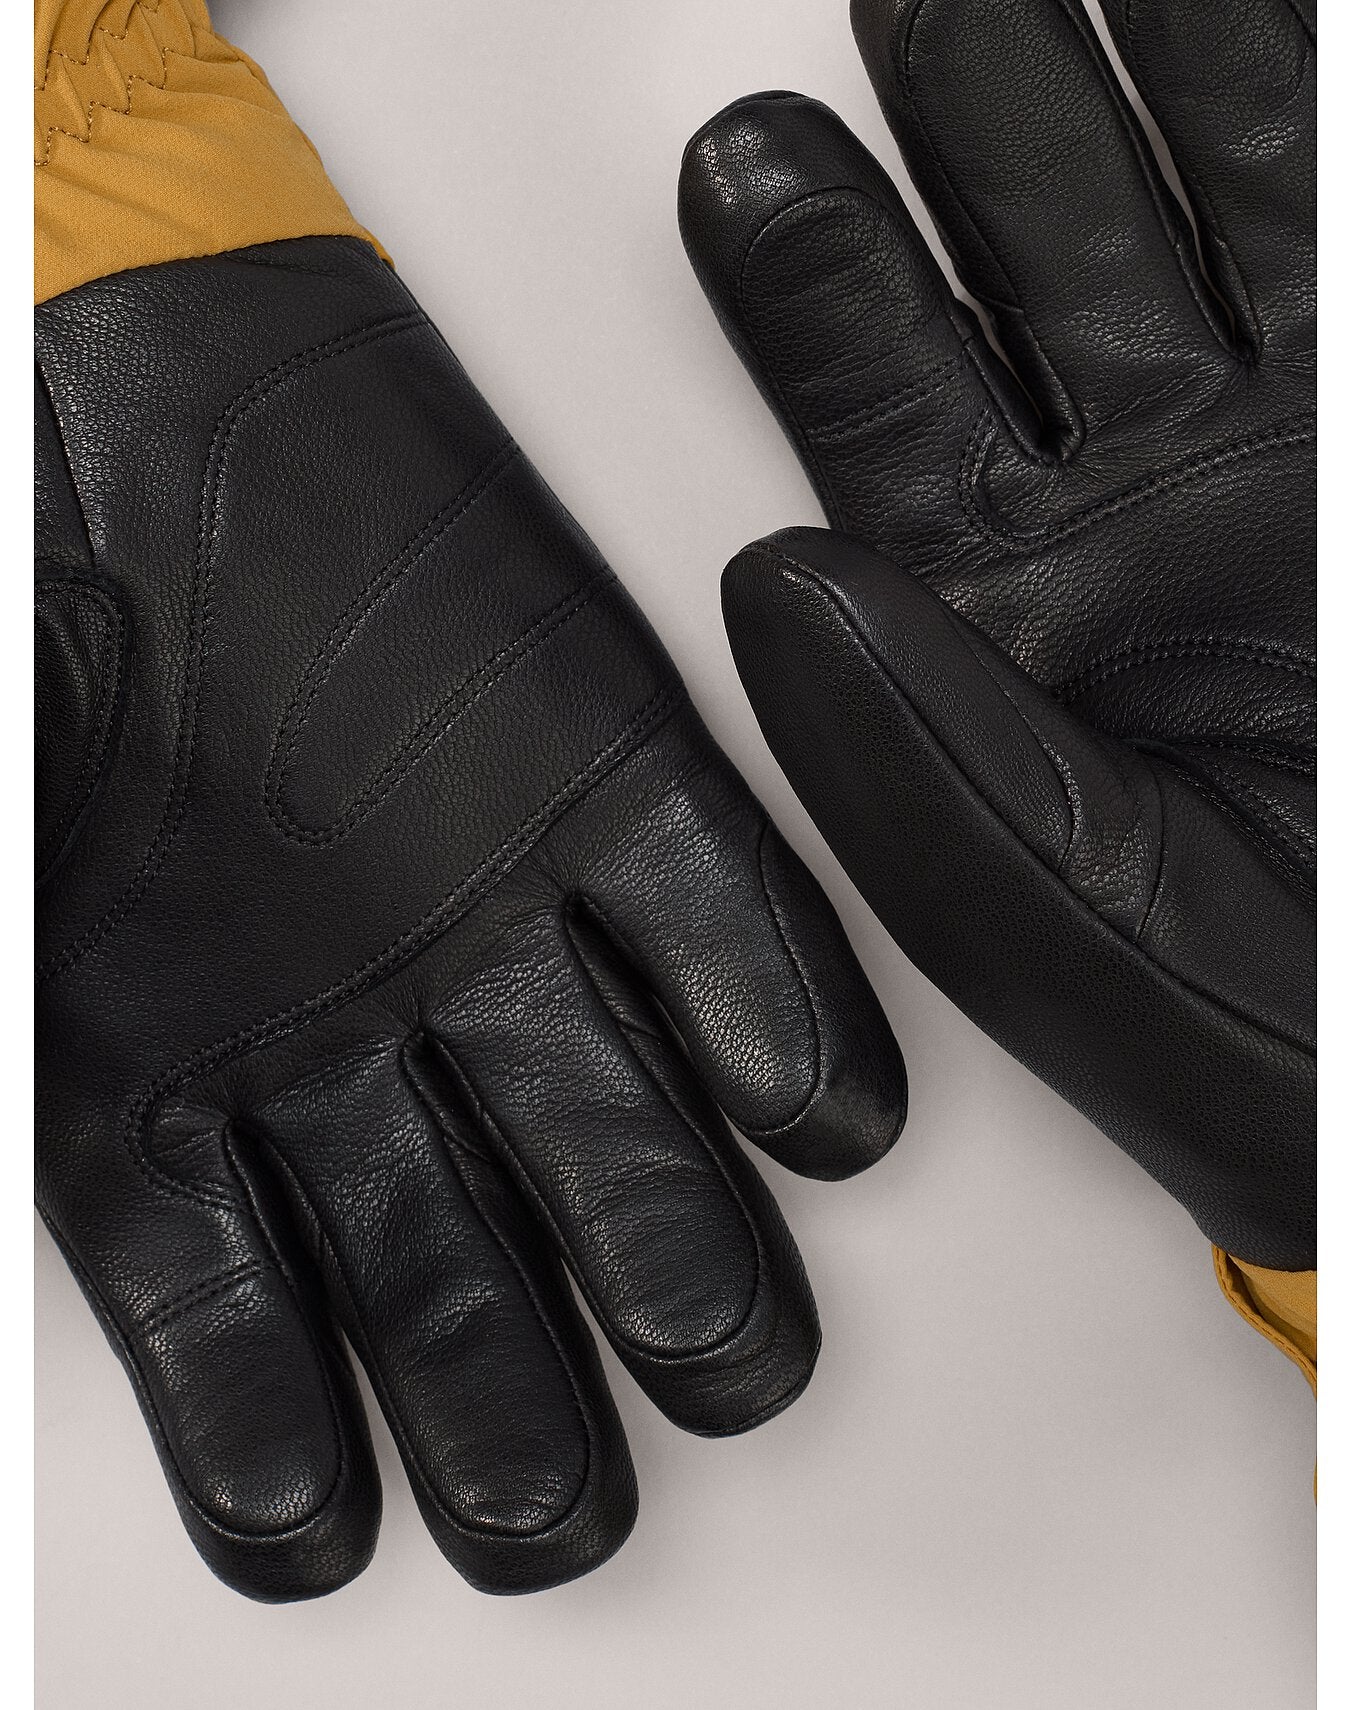 Arc'teryx Sabre Glove (Past Season)